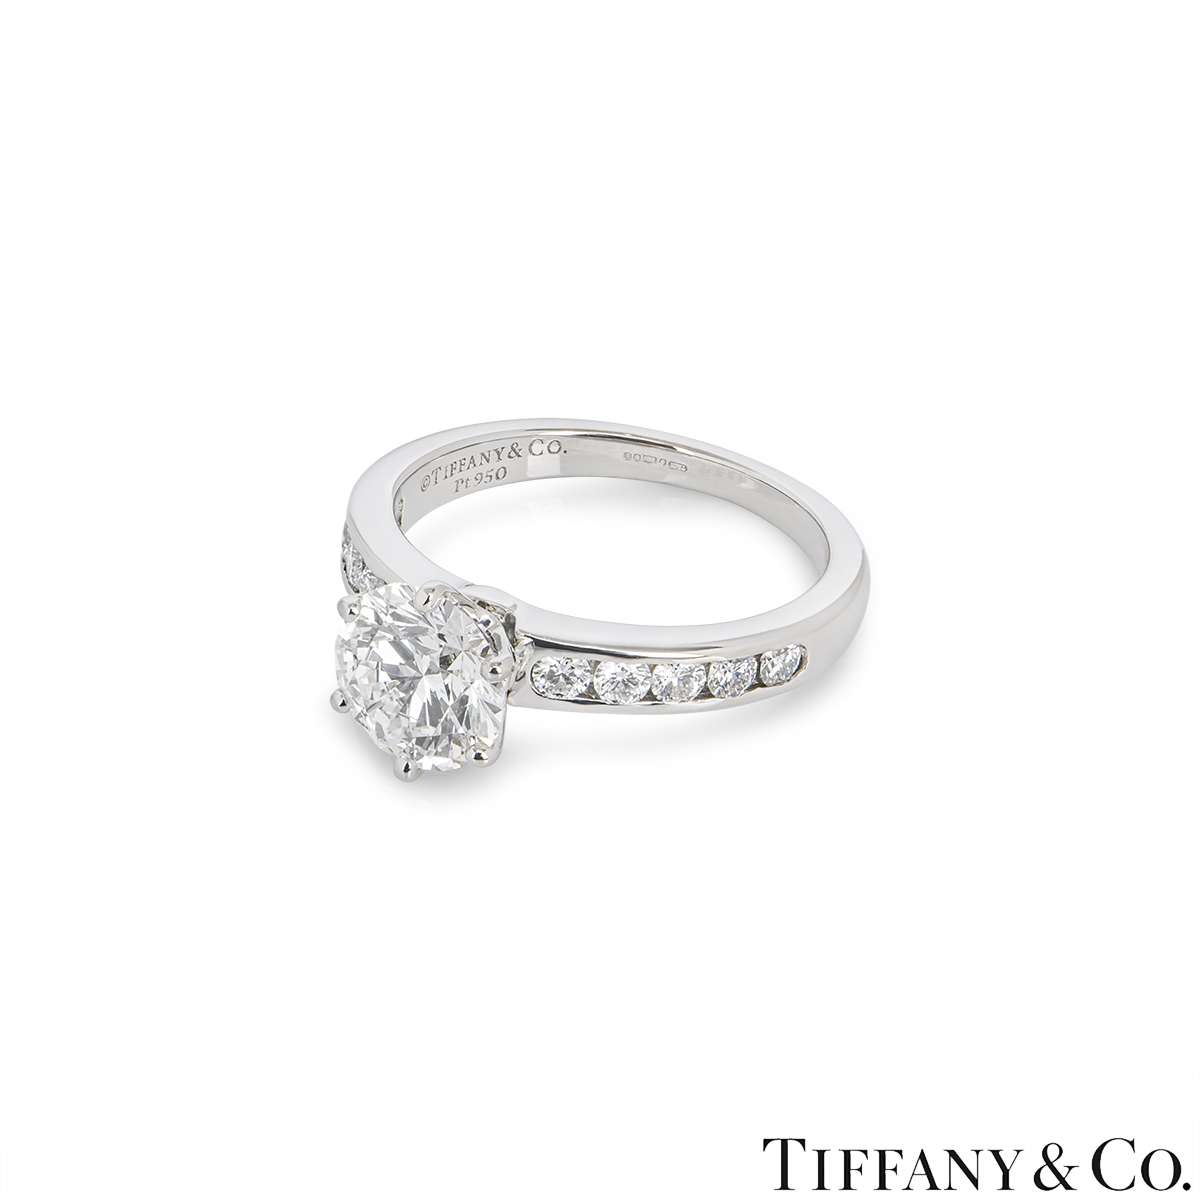 Tiffany & Co. Platinum Diamond Ring 1.53ct F/VS2